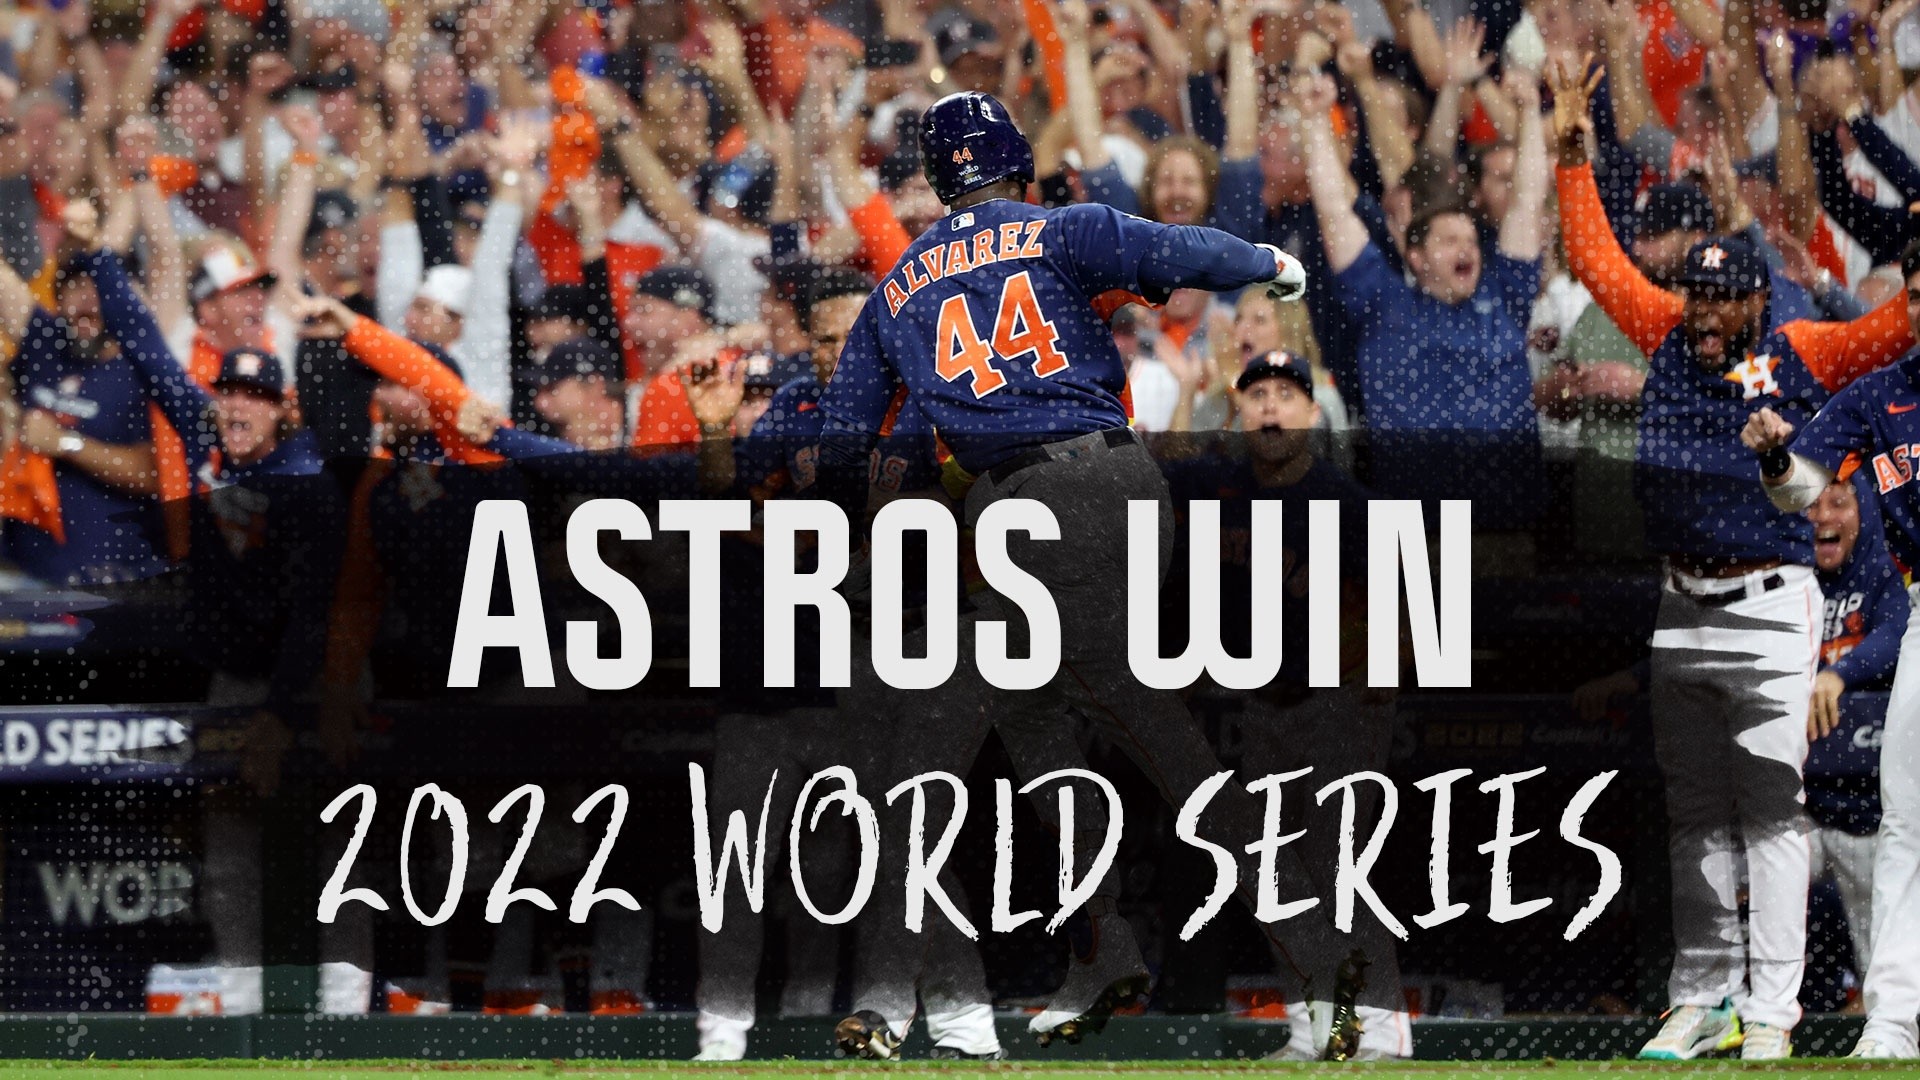 Cheering fans greet World Series champion Houston Astros